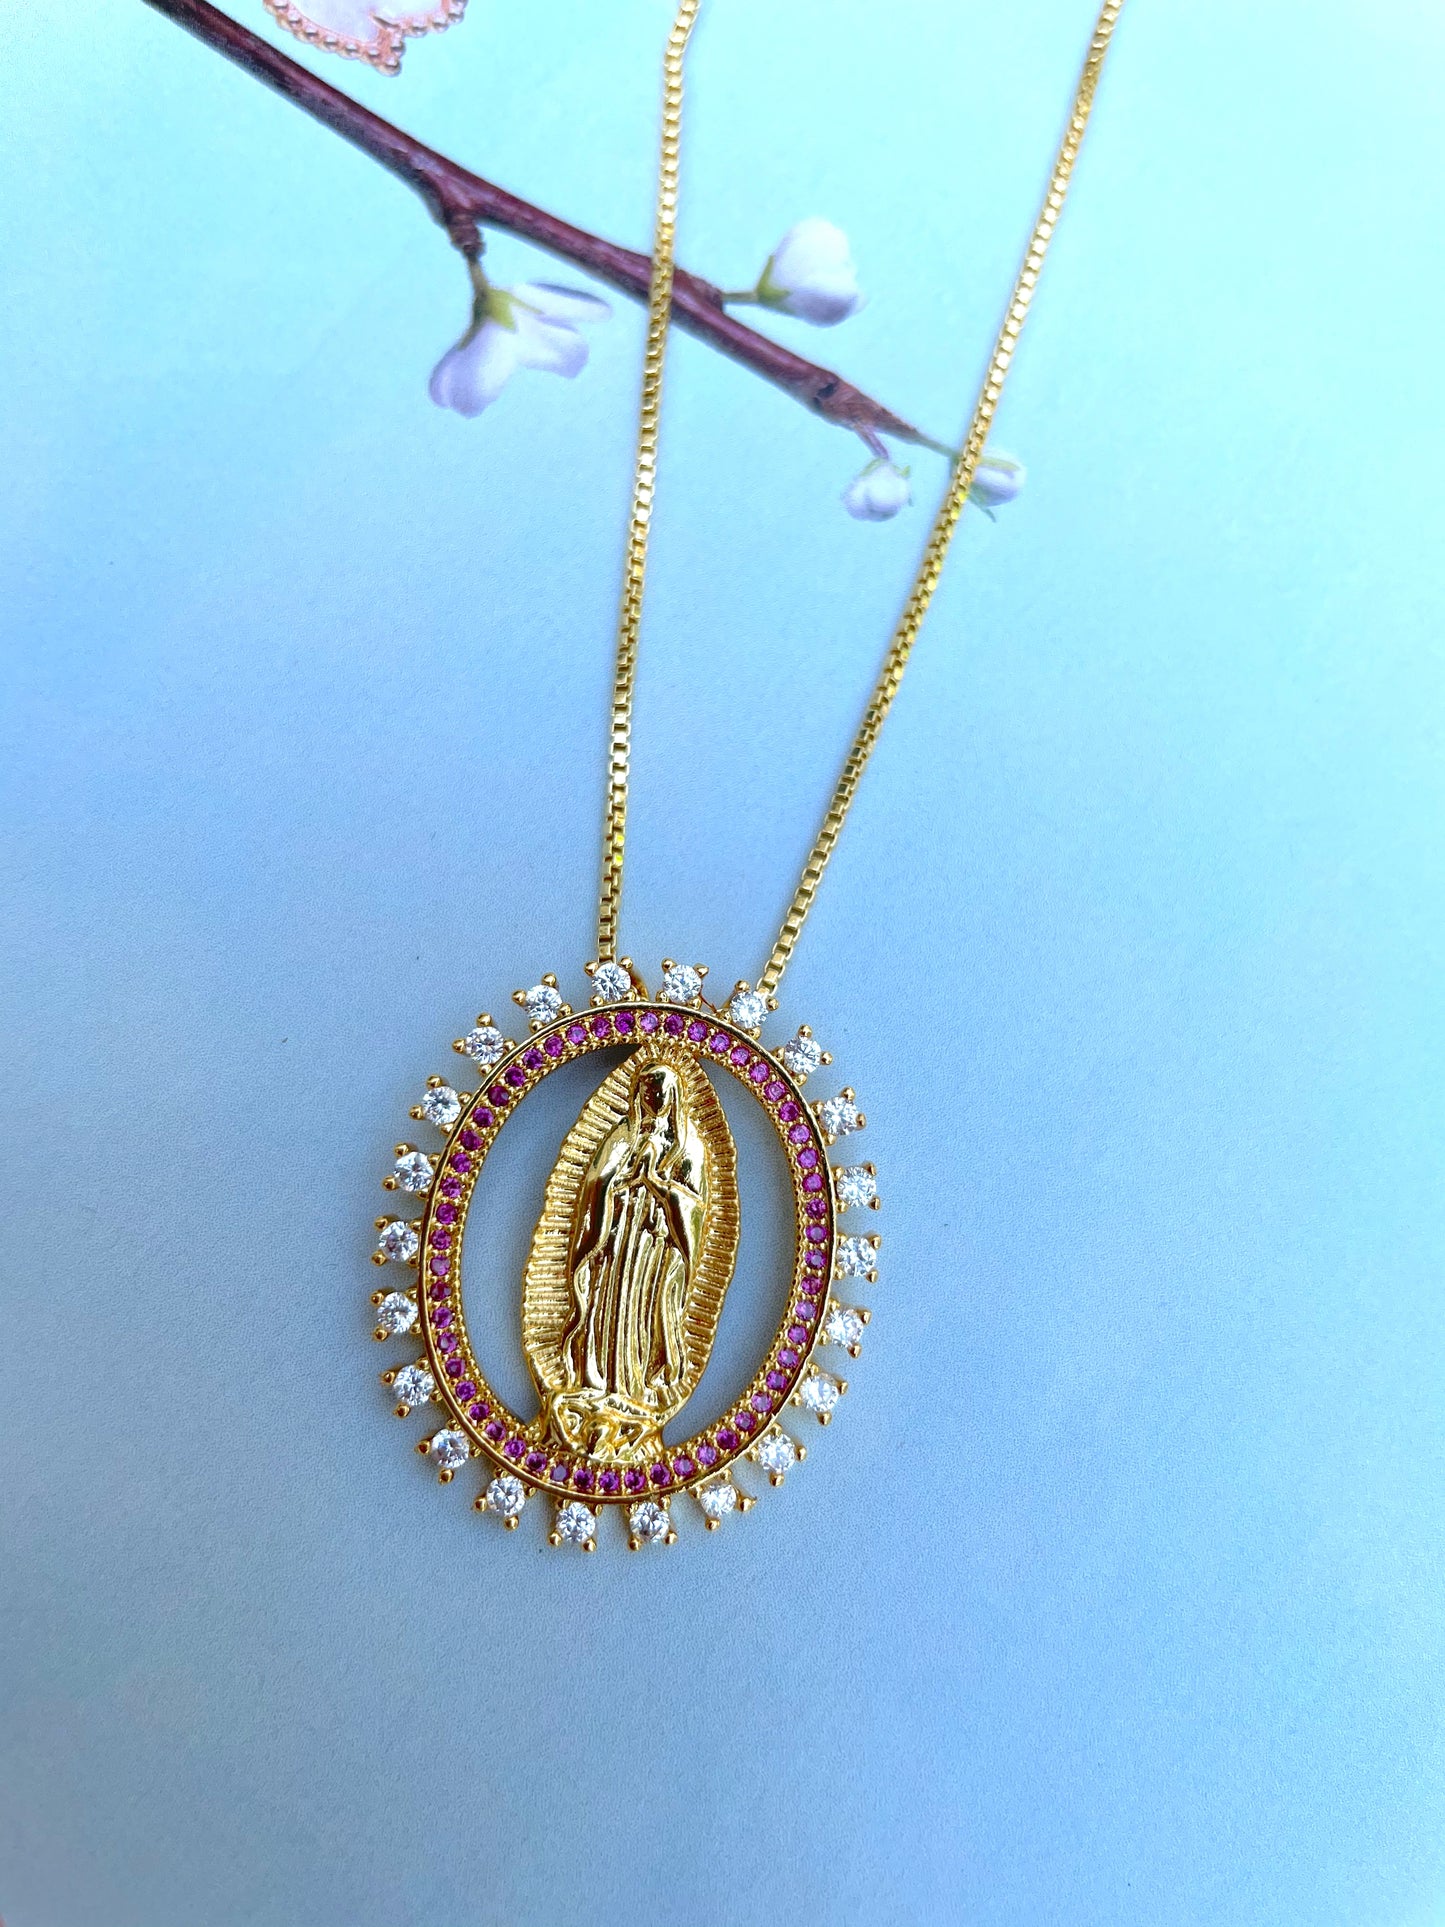 Religious pendant necklace